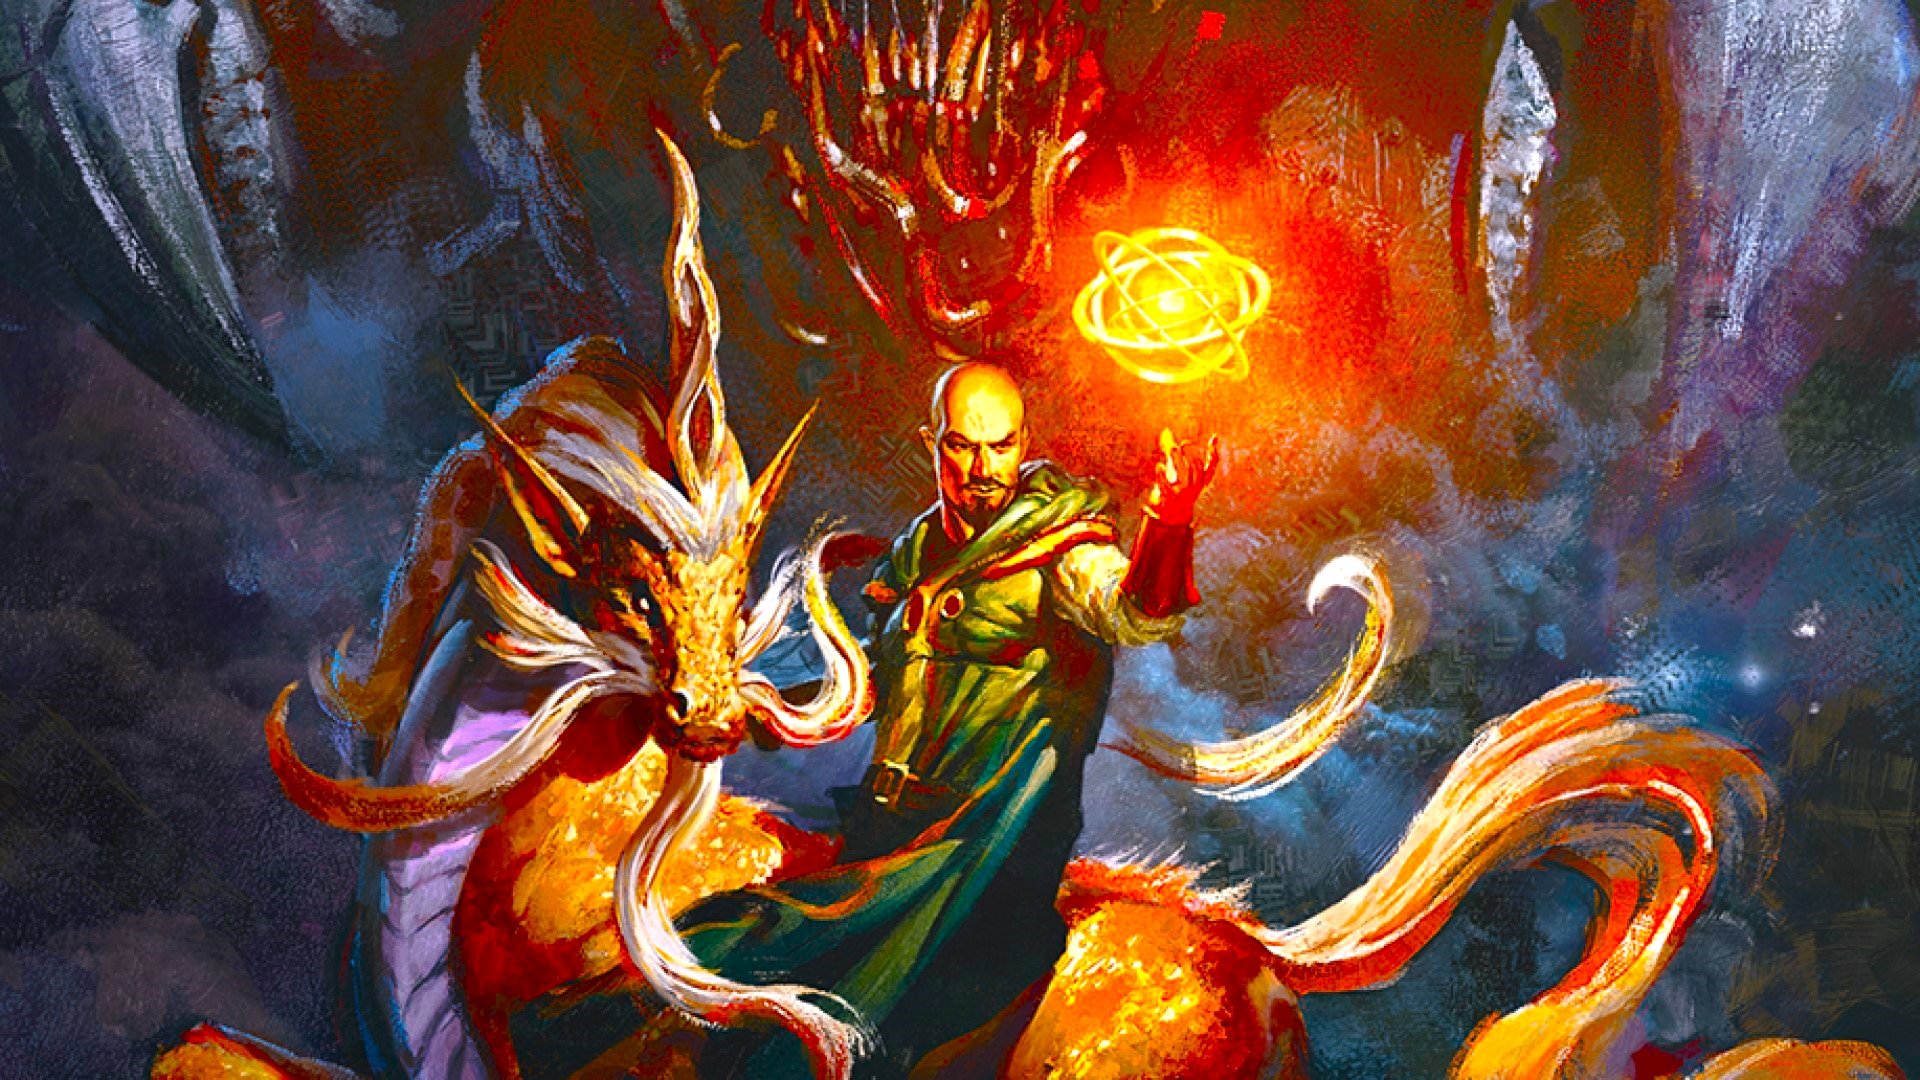 DnD Genasi 5e - Wizard Mordenkainen riding a magical beast (art by Wizards of the Coast)